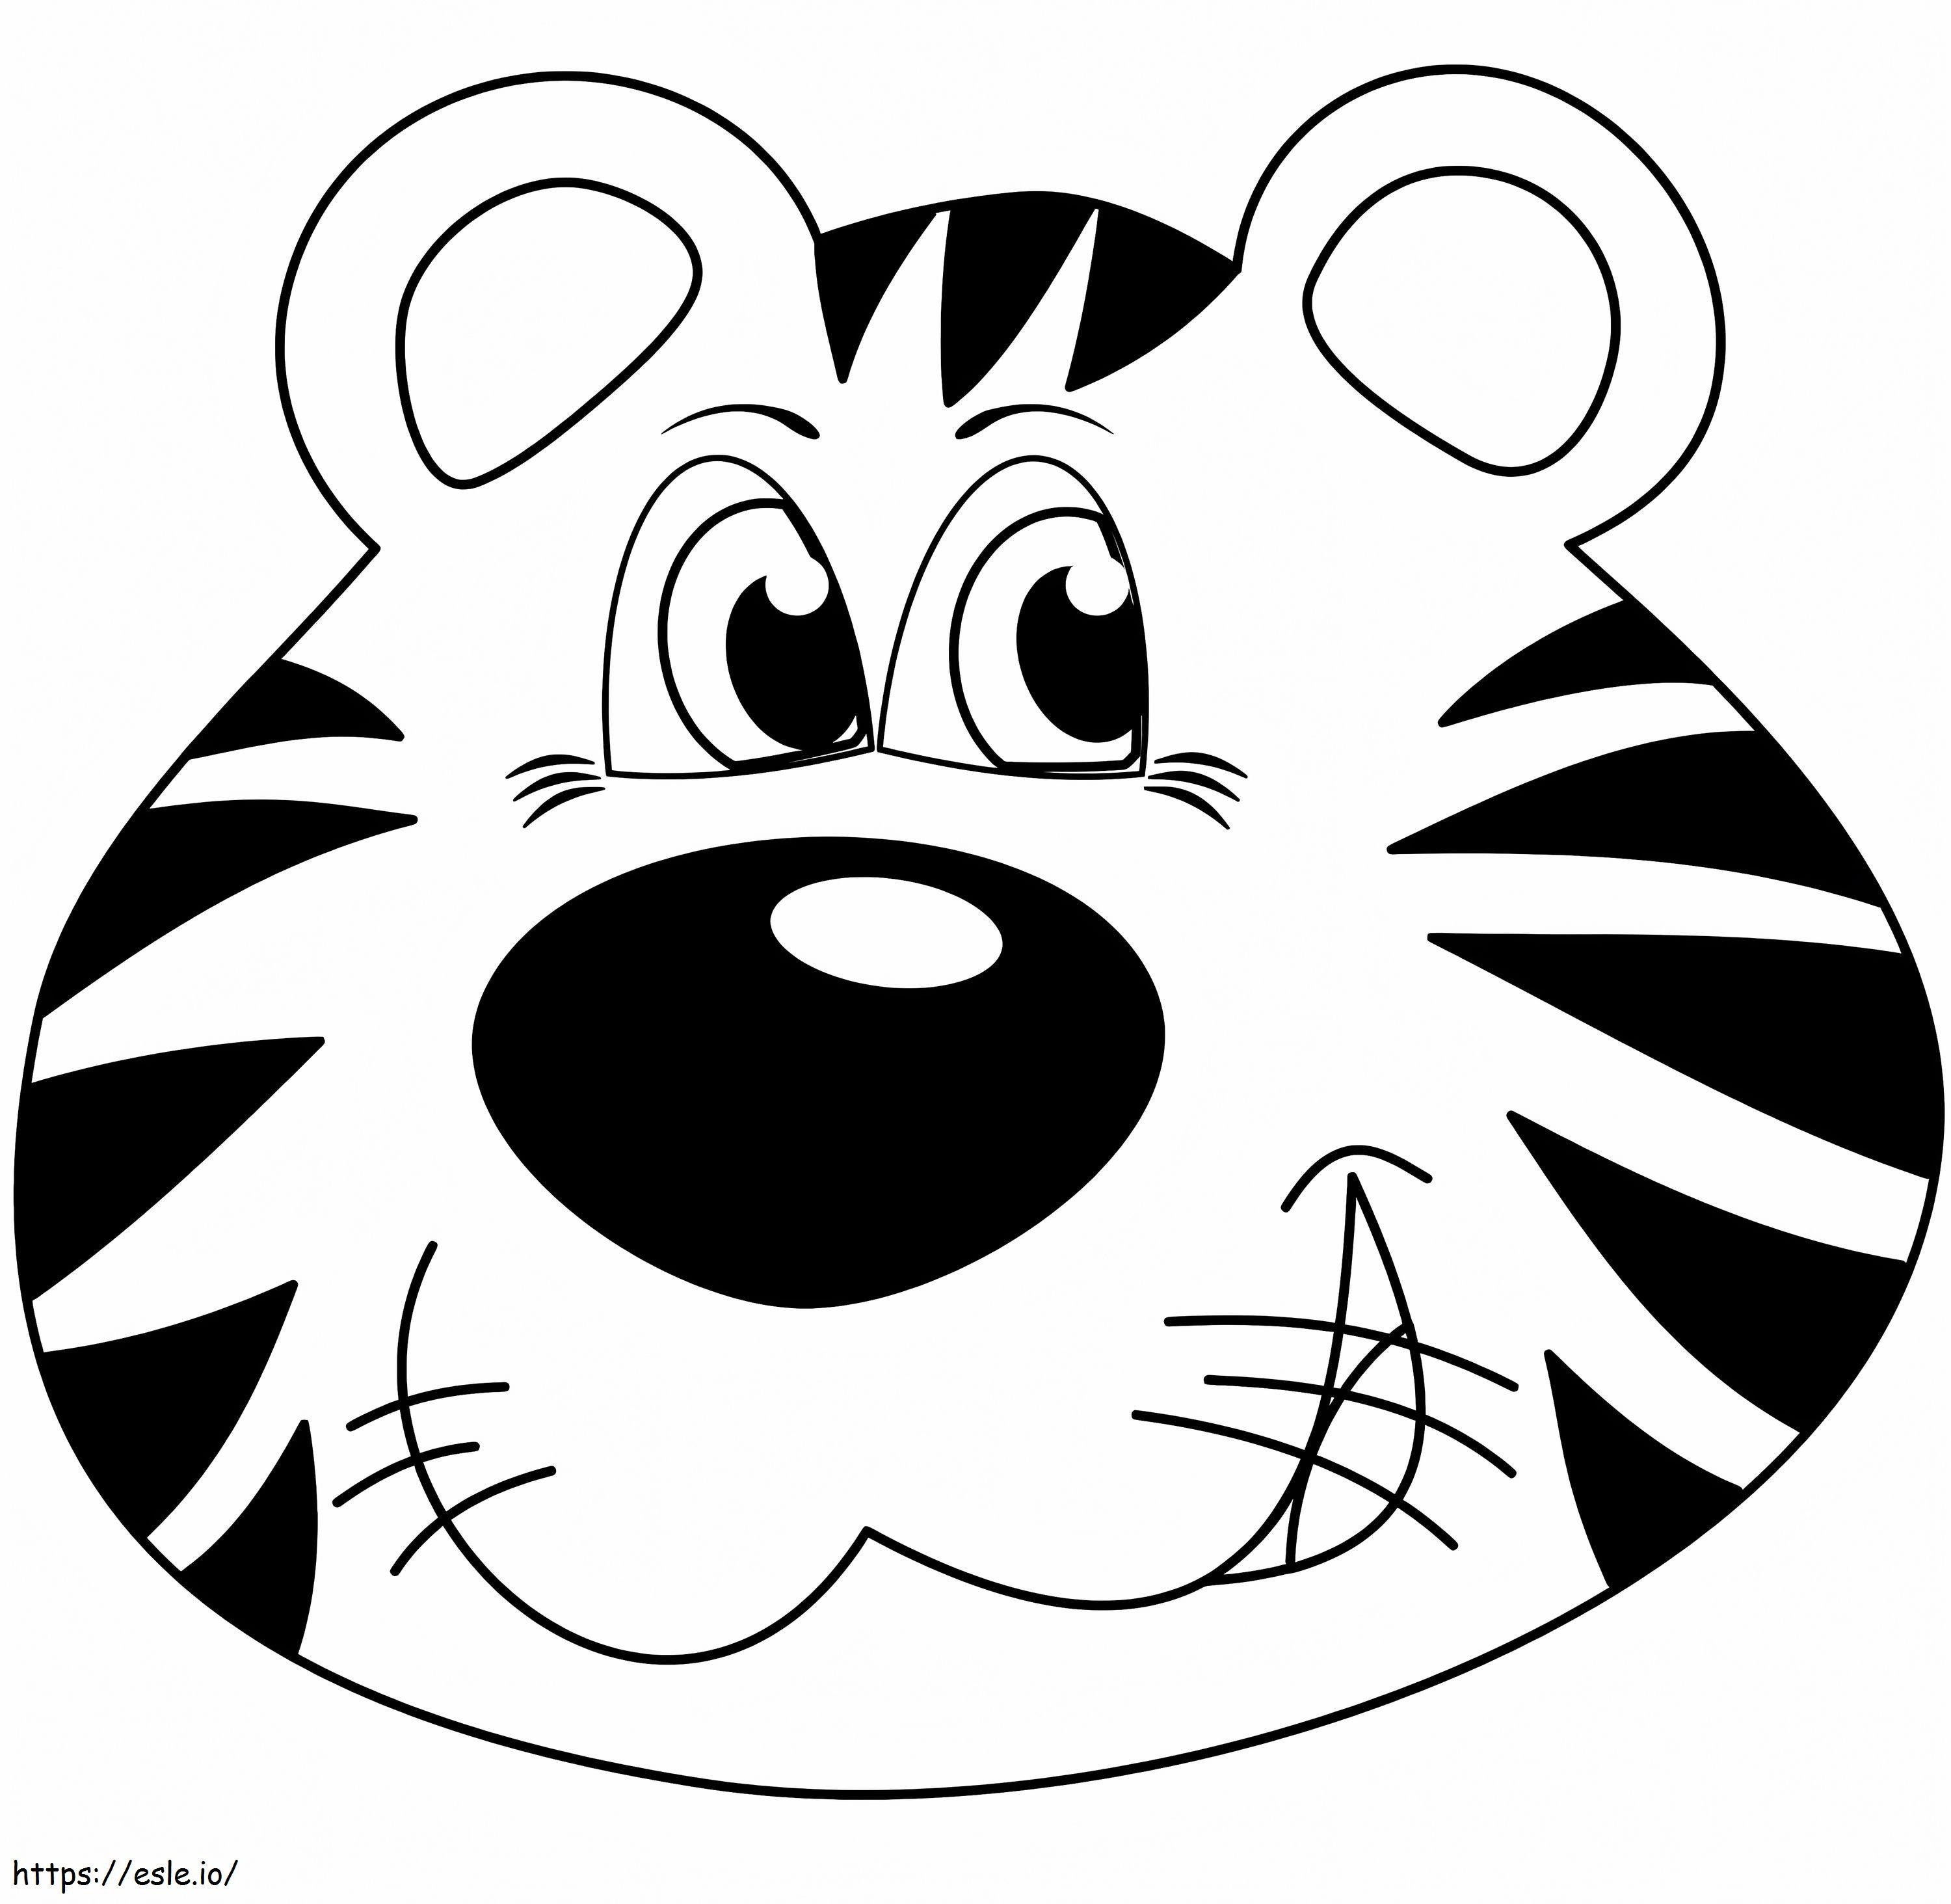 Cara de tigre de desenho animado para colorir